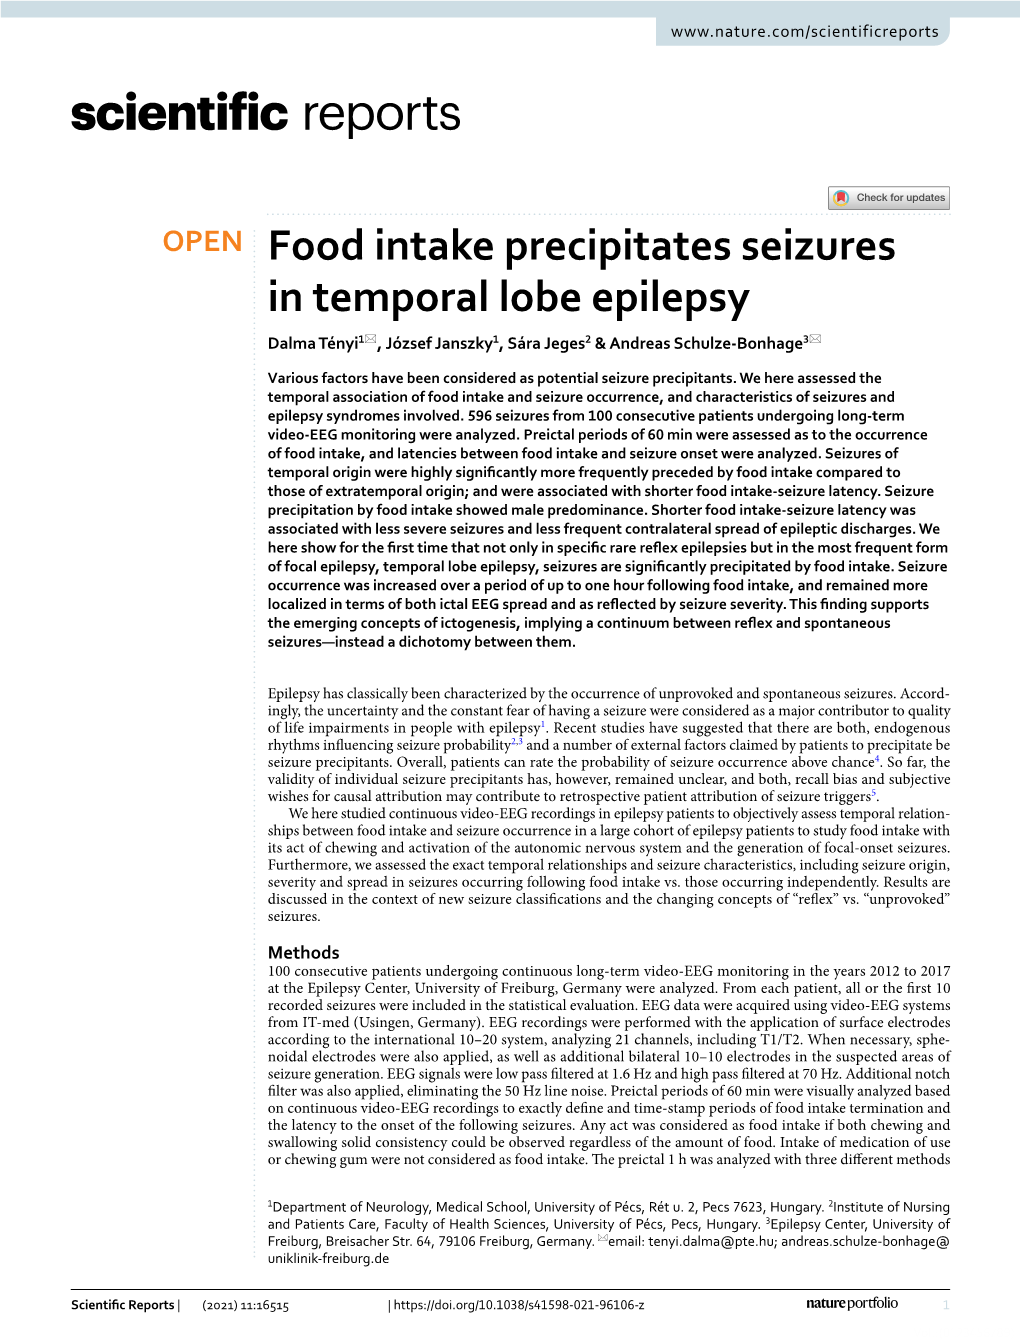 Food Intake Precipitates Seizures in Temporal Lobe Epilepsy Dalma Tényi1*, József Janszky1, Sára Jeges2 & Andreas Schulze‑Bonhage3*